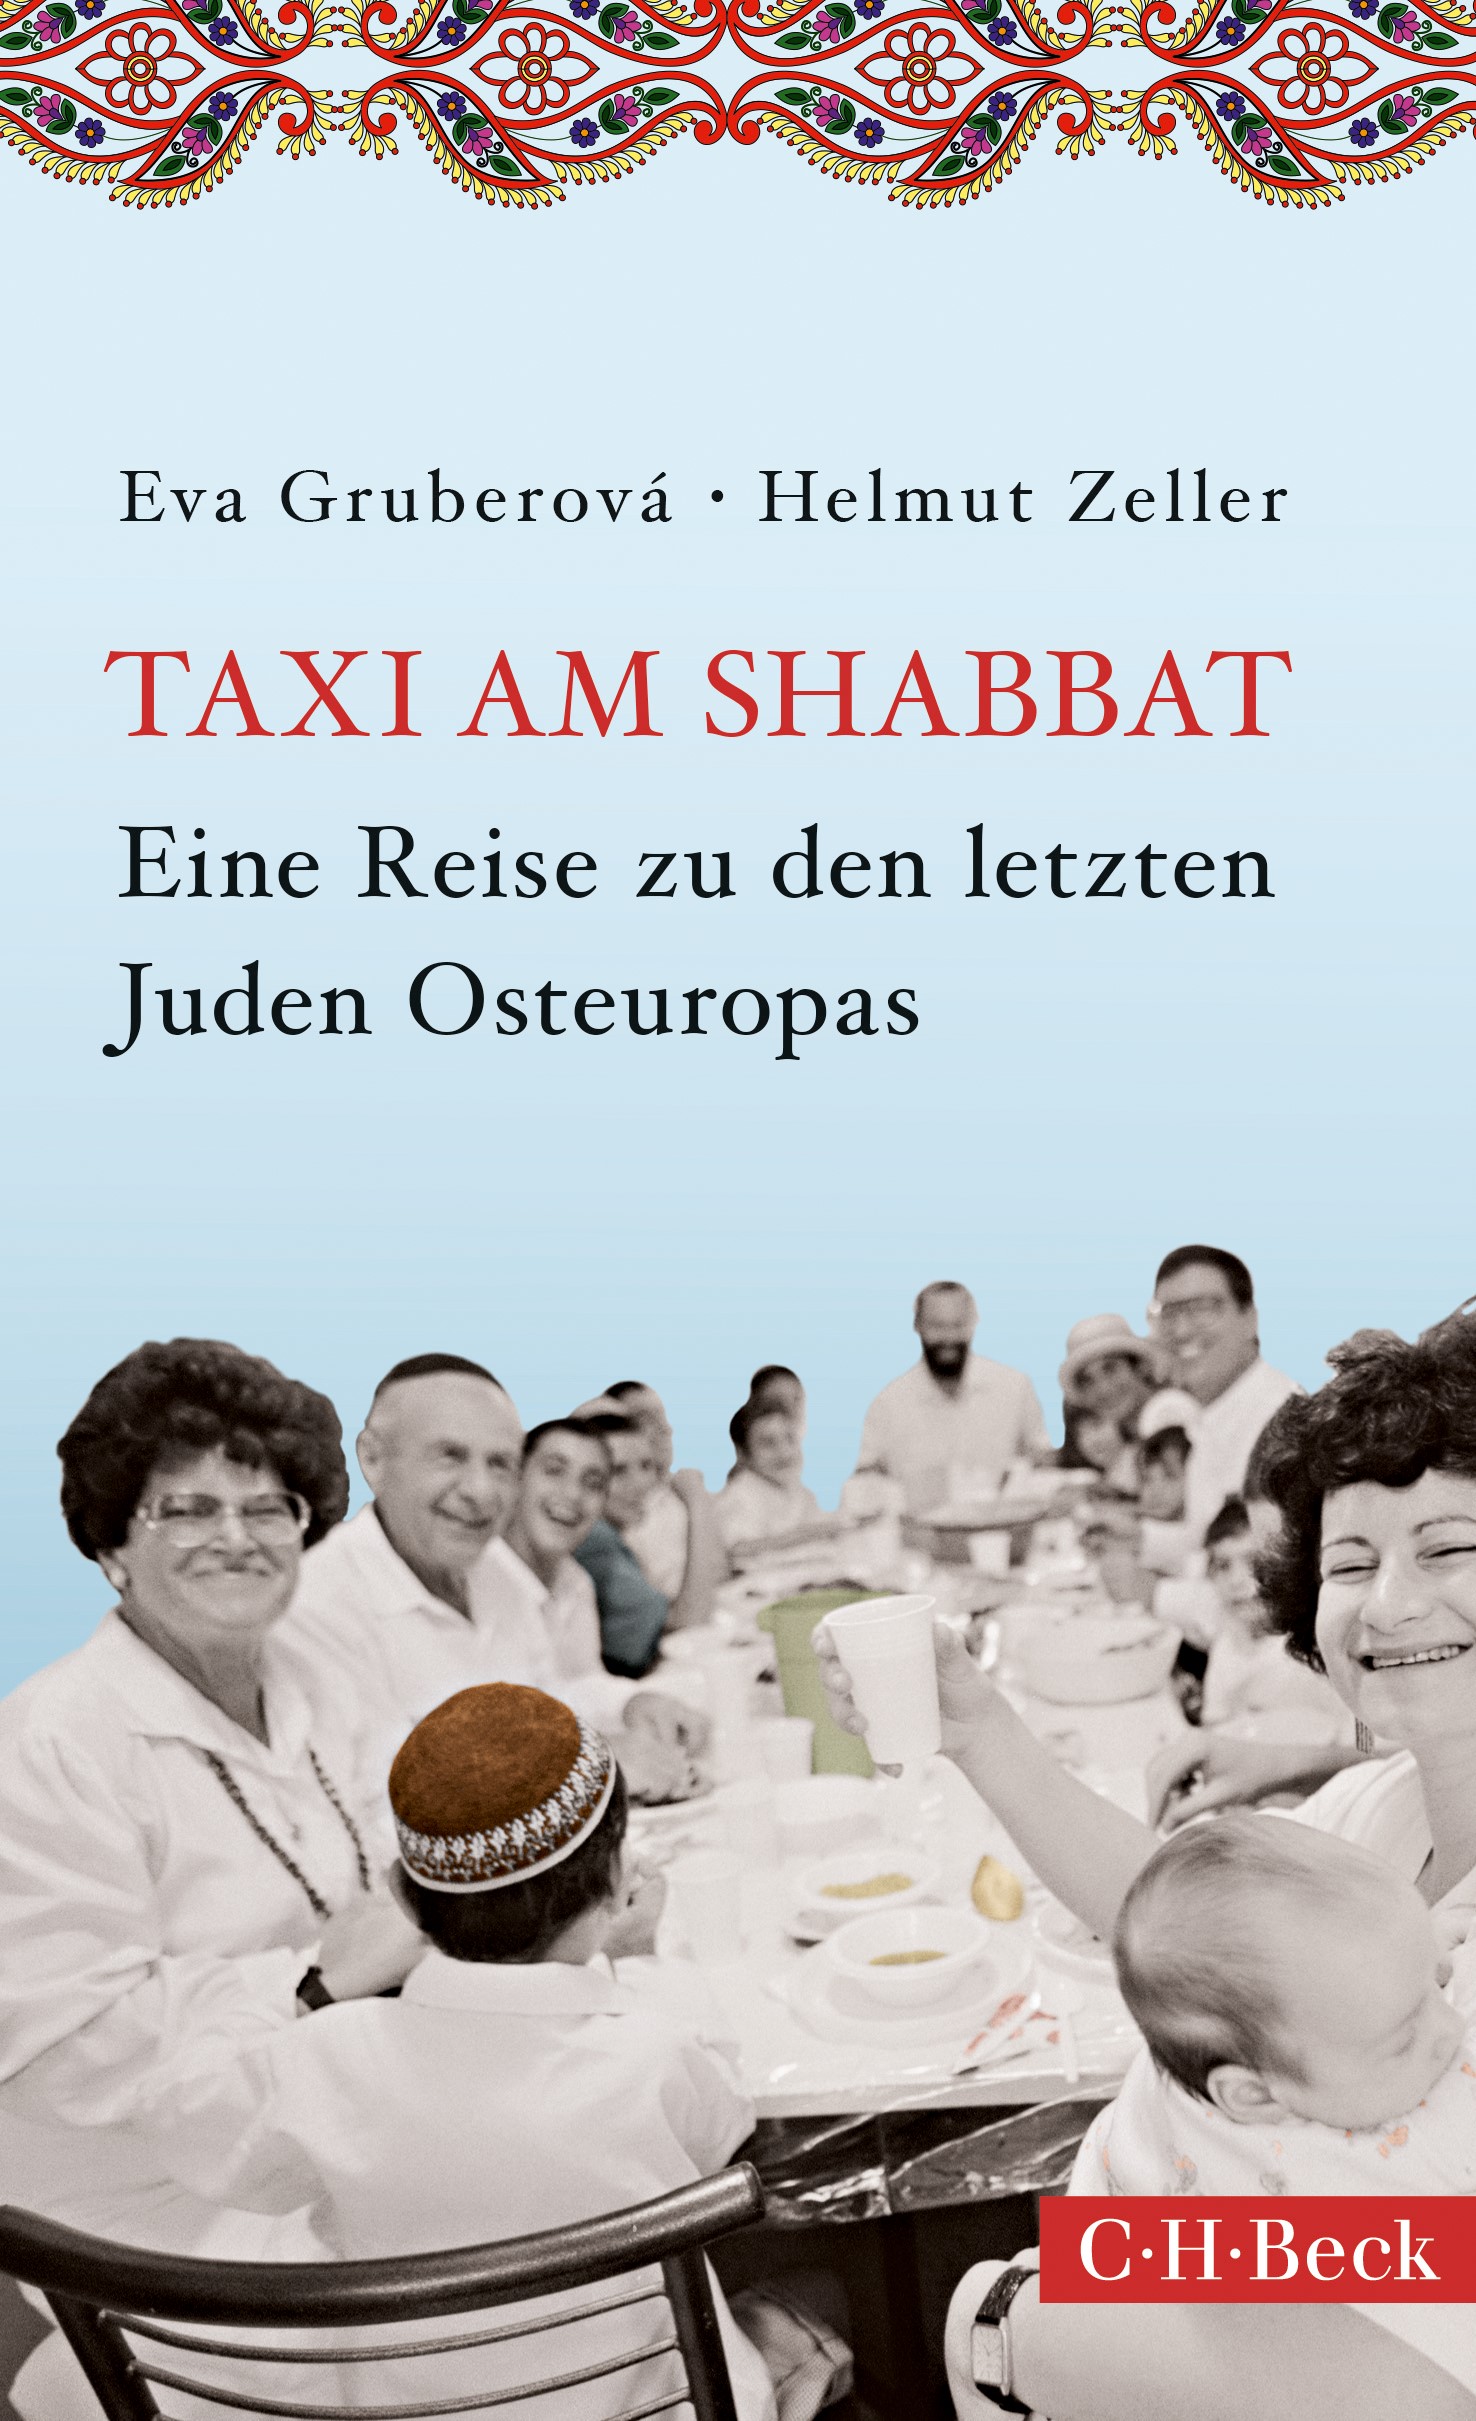 Cover: Gruberová, Eva / Zeller, Helmut, Taxi am Shabbat